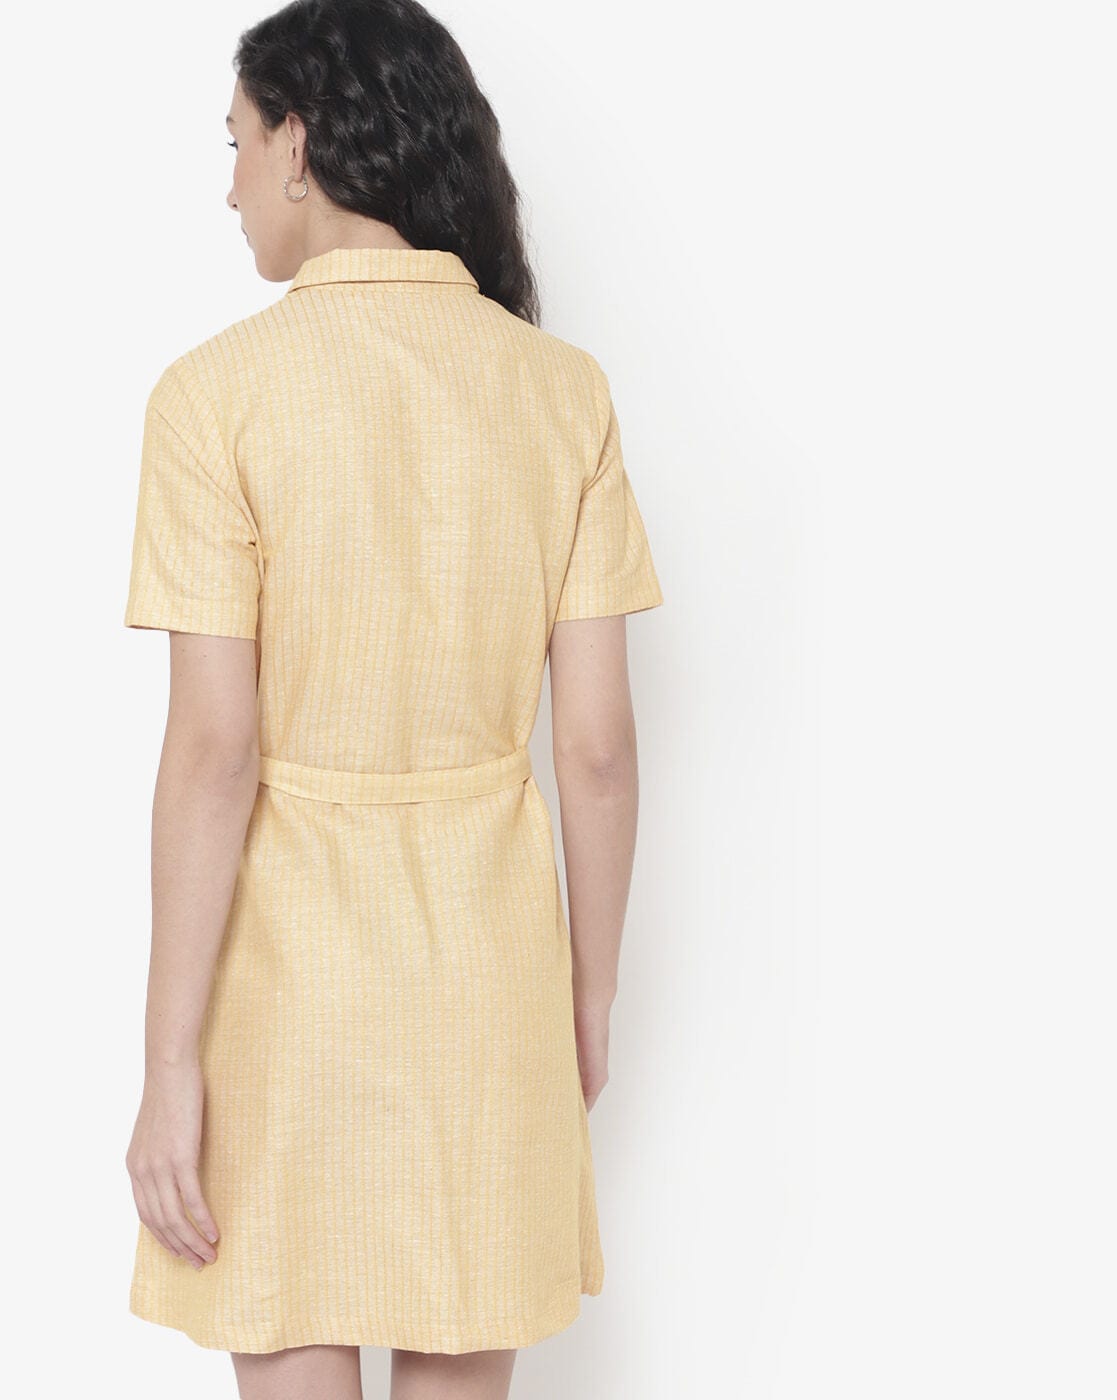 Mustard Yellow Textured Shirt Dress with Waist Tie Up